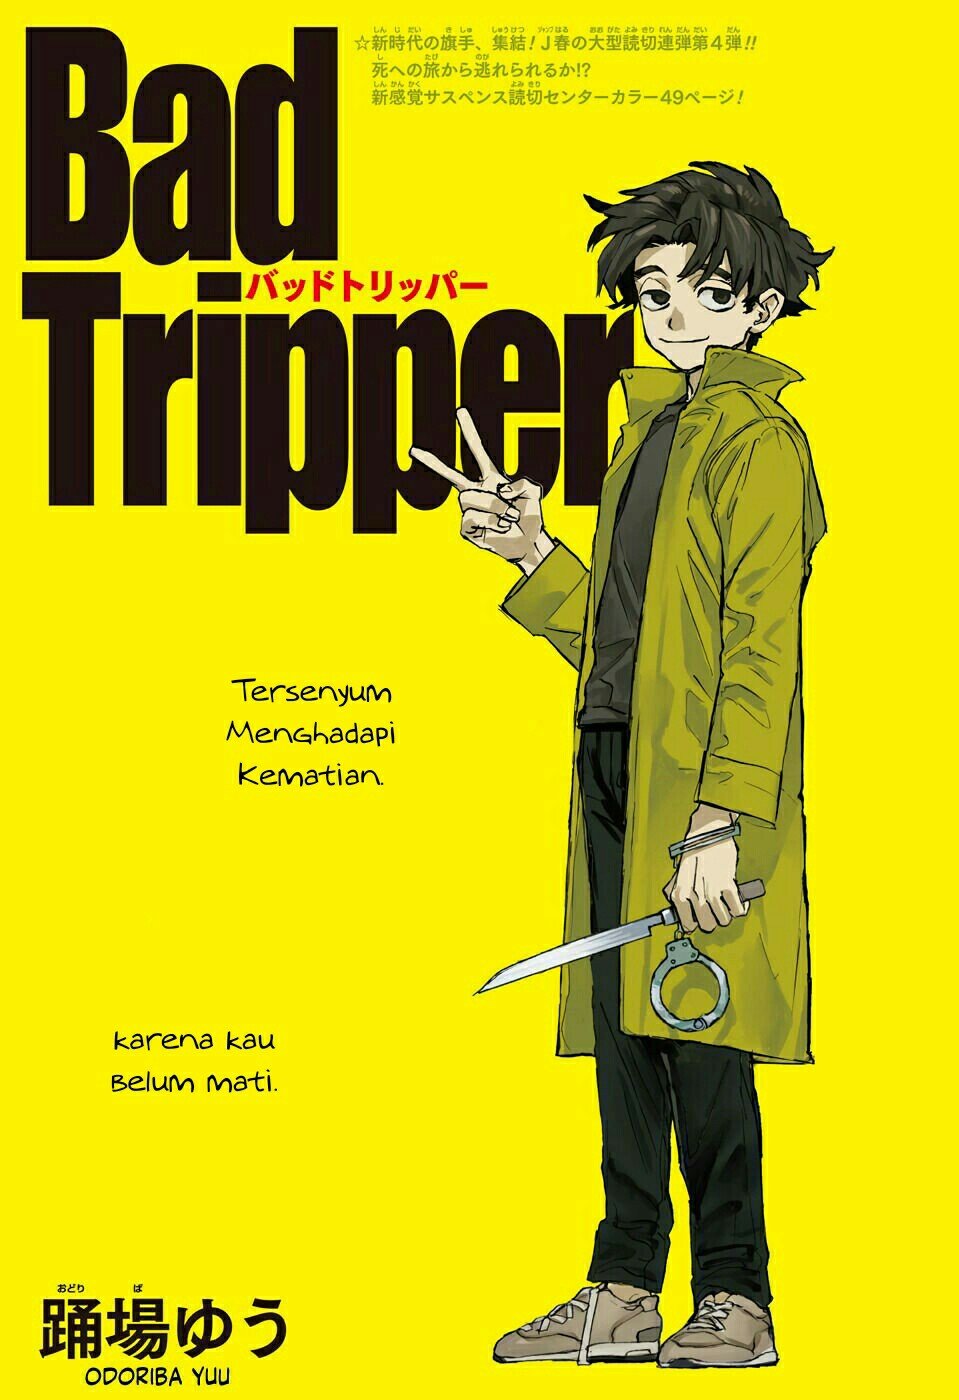 Baca Bad Tripper Chapter 0  - GudangKomik